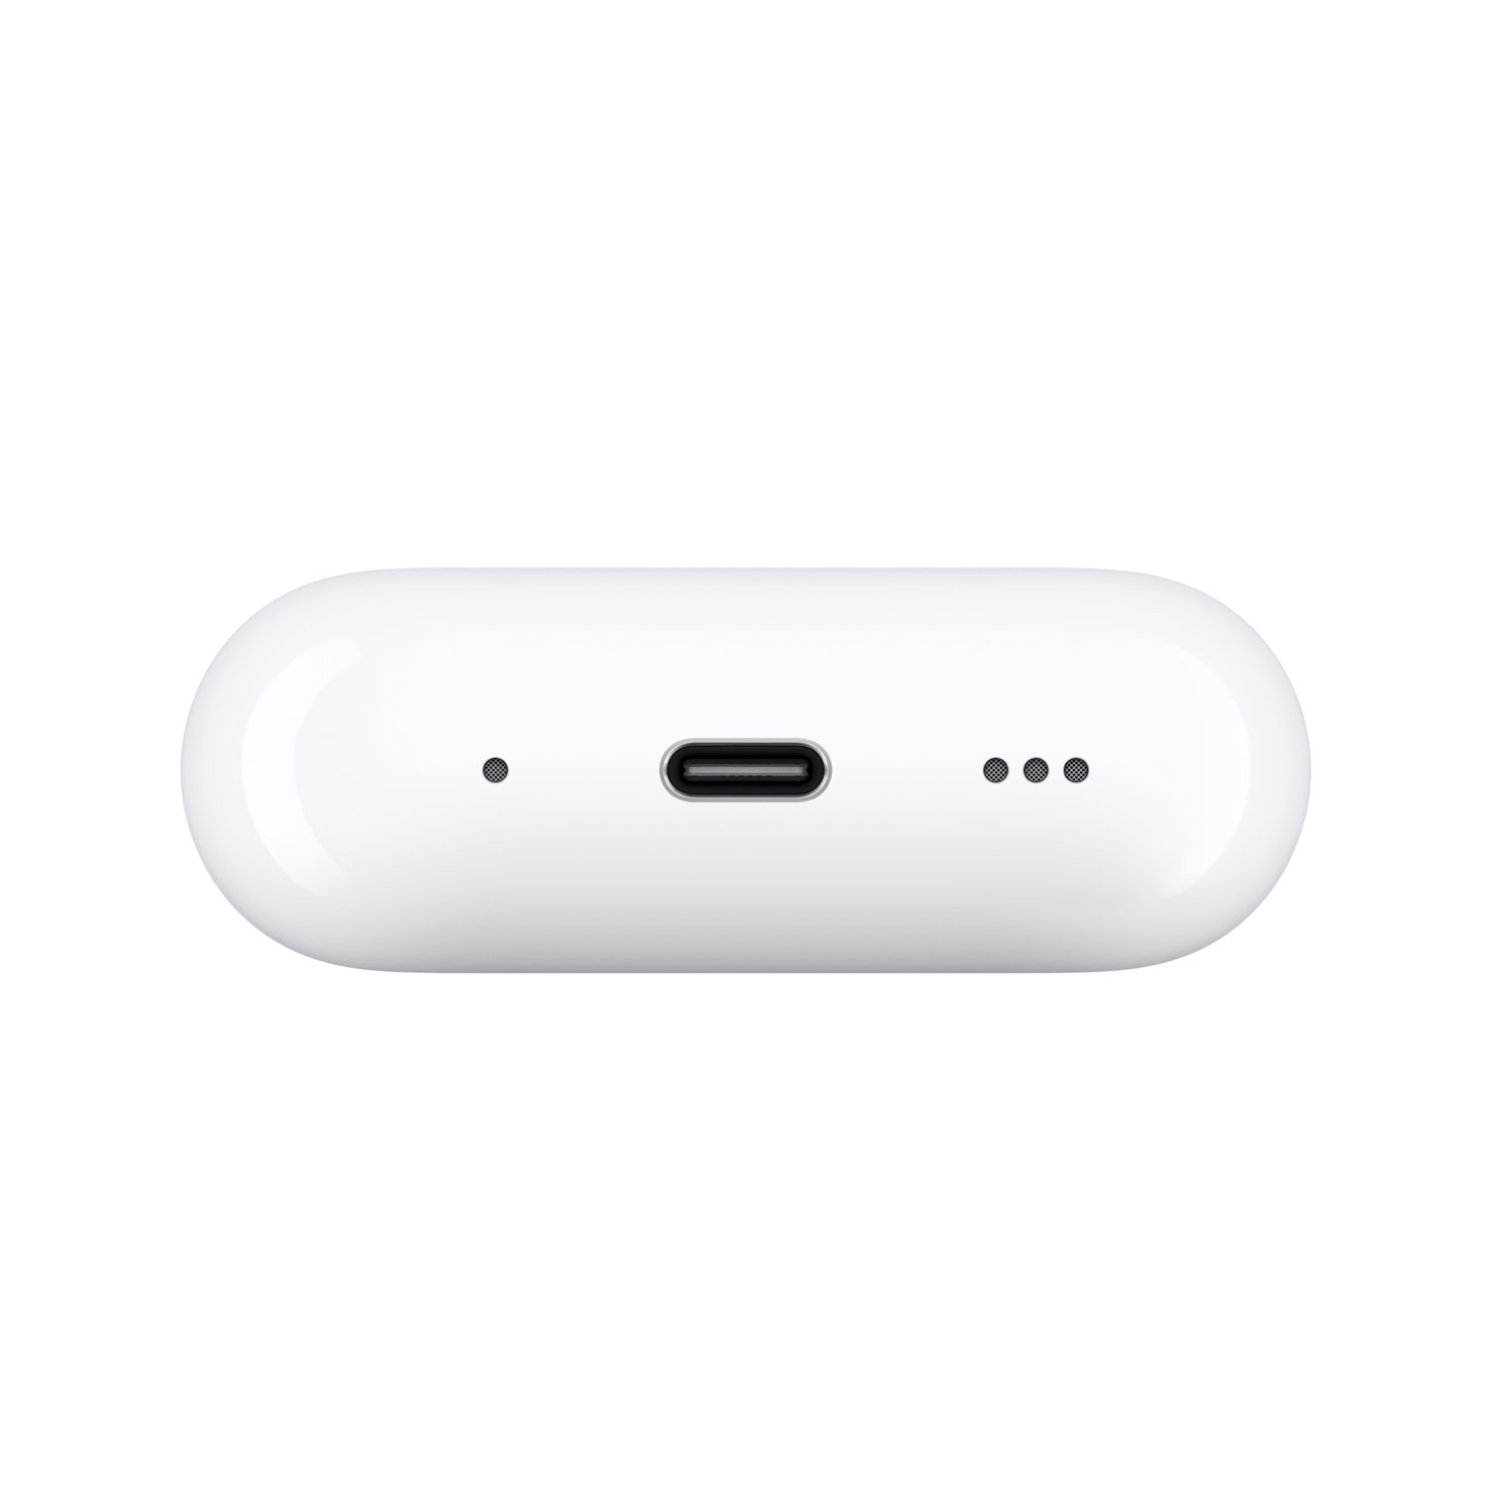 هدفون بلوتوث اپل مدل ایرپاد پرو نسل دوم با قابلیت شارژ USB-C